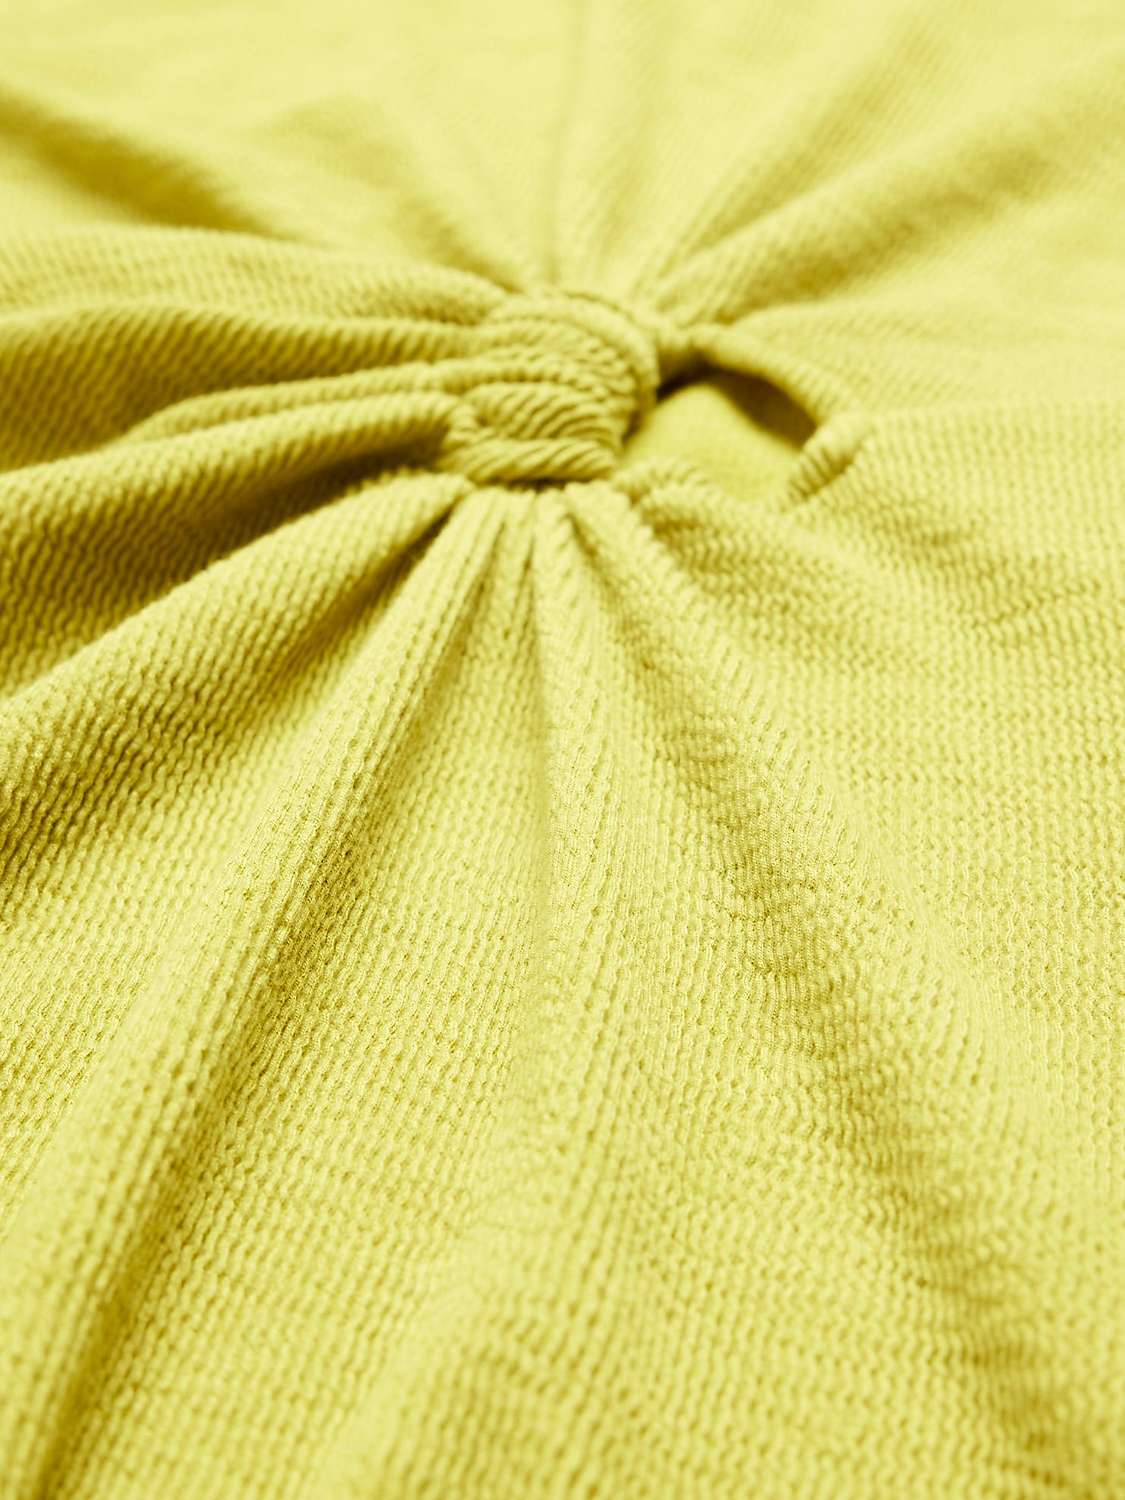 Buy Mint Velvet Cutout Midi Jersey Dress, Chartreuse Online at johnlewis.com